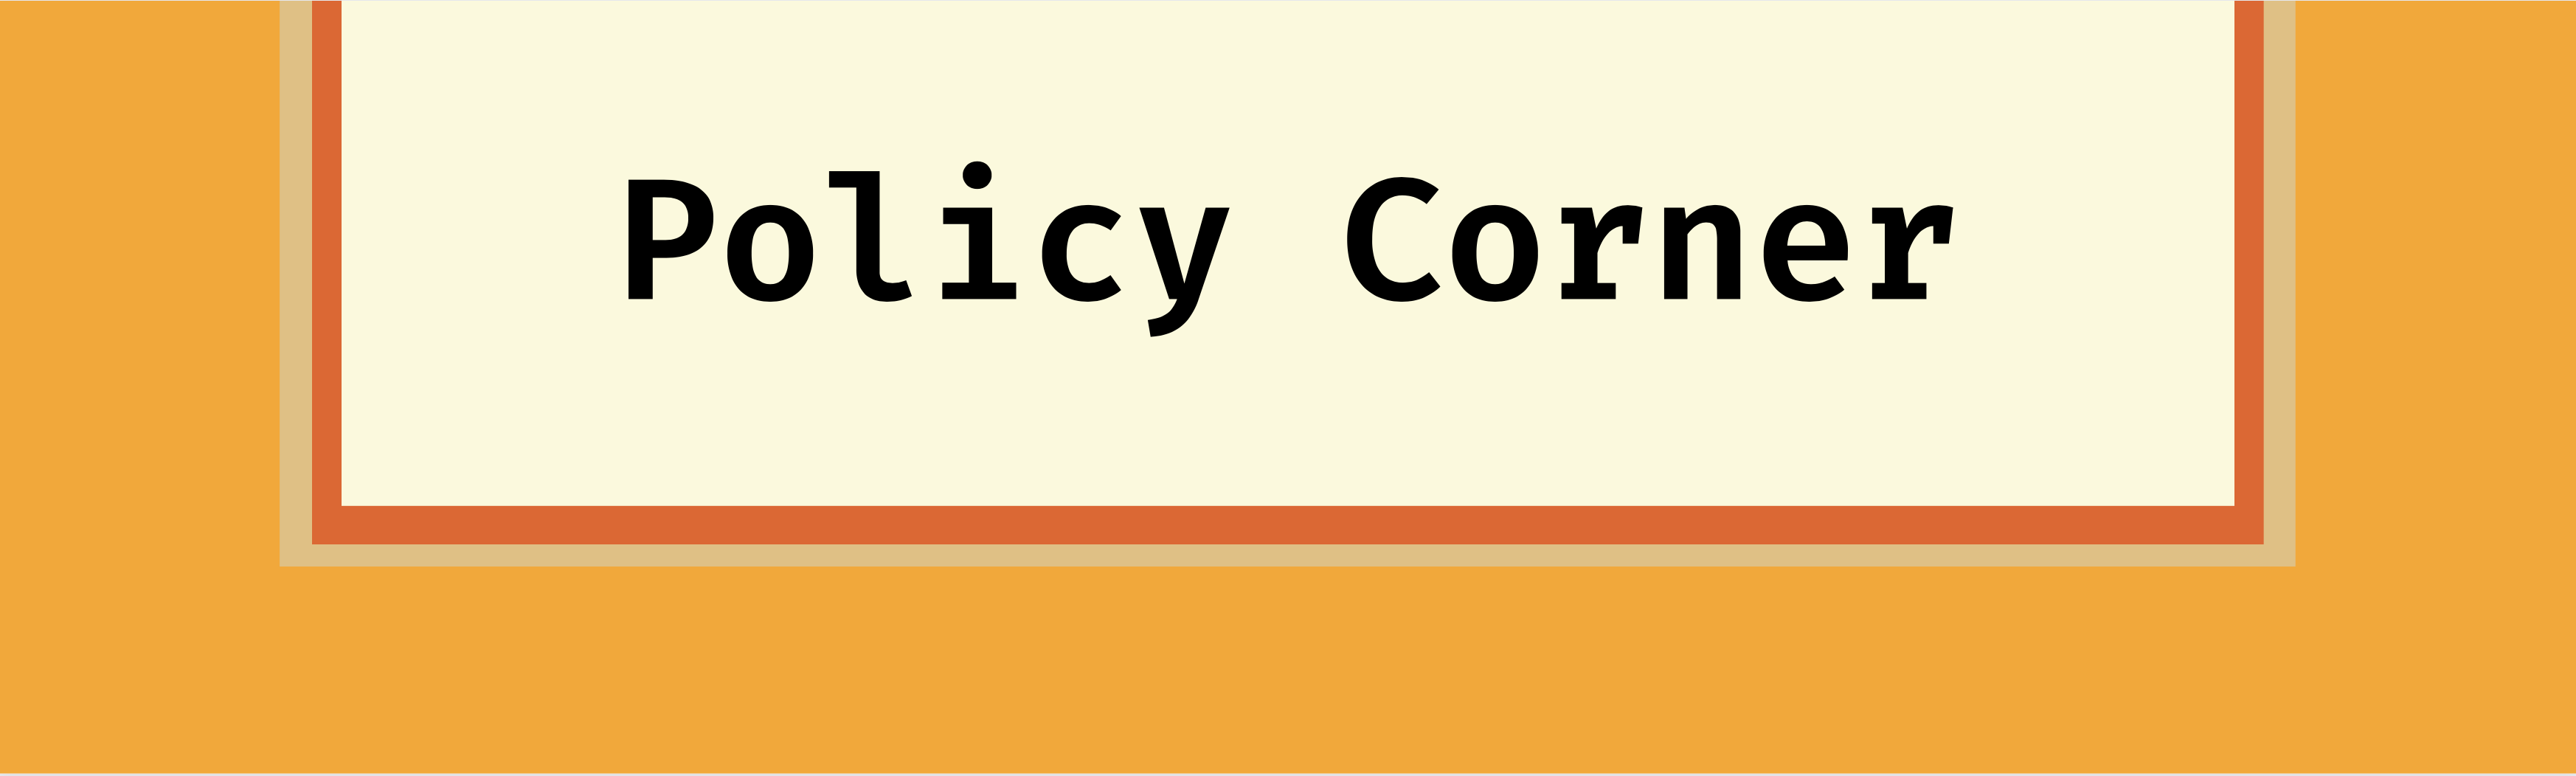 Policy Corner